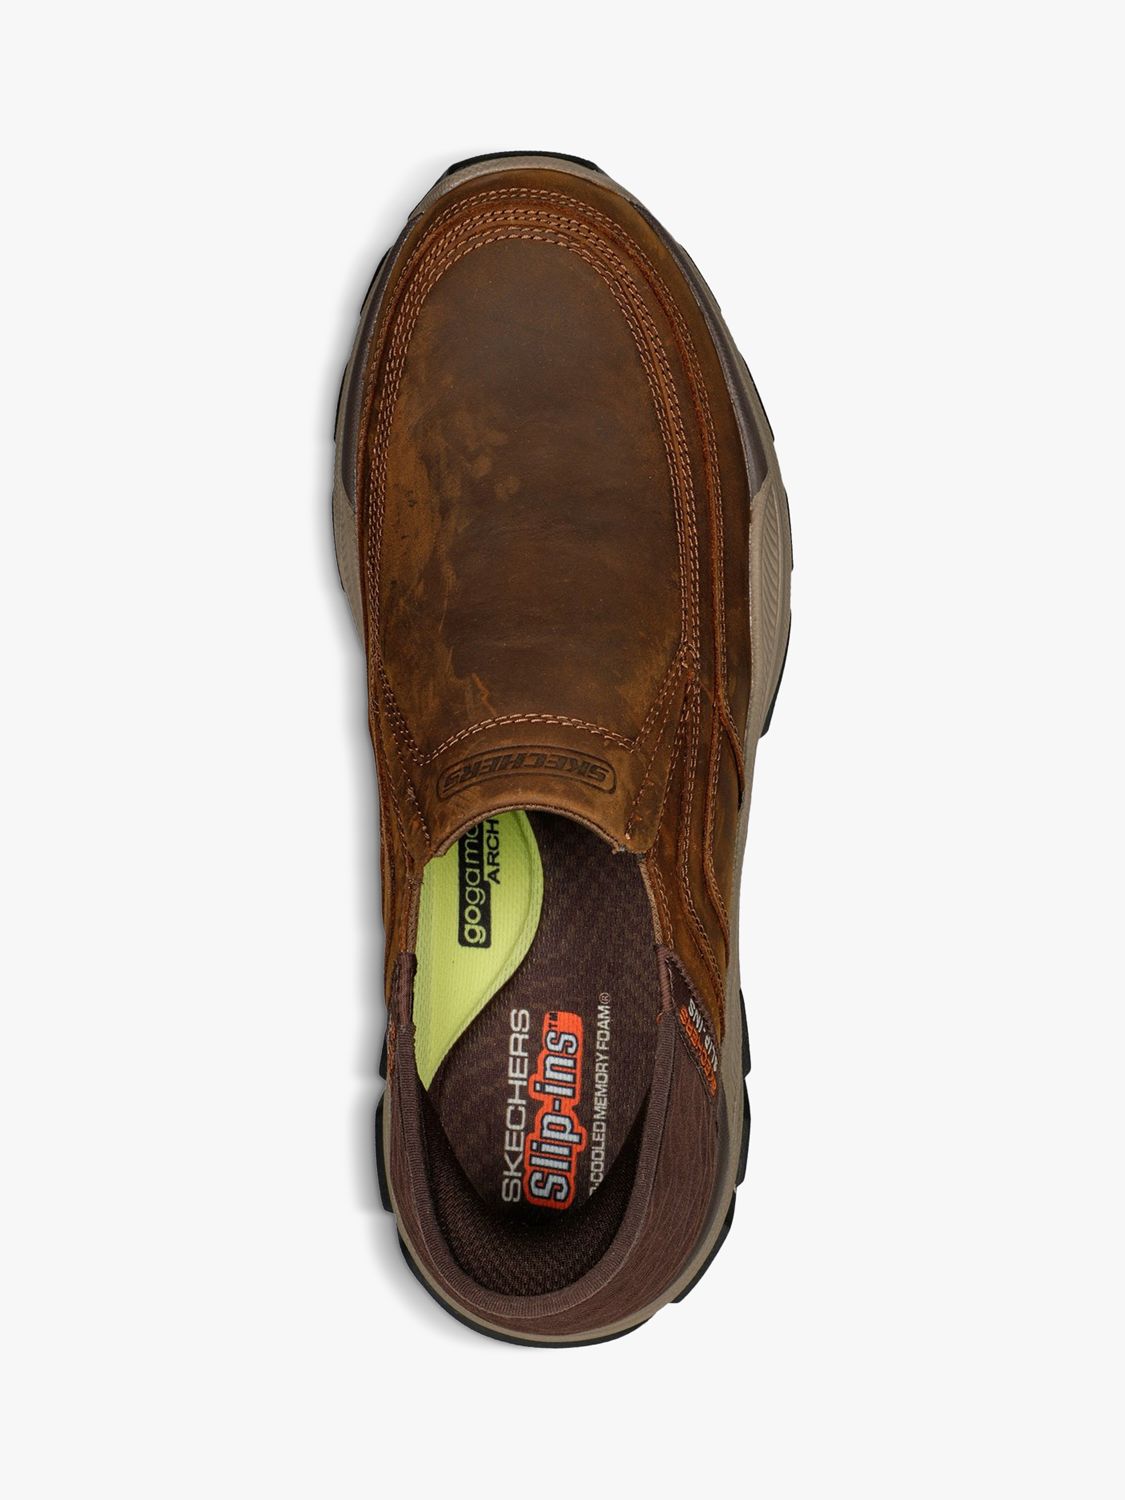 Skechers Respected Elgin Slip-On Shoes, Dark Brown, 6